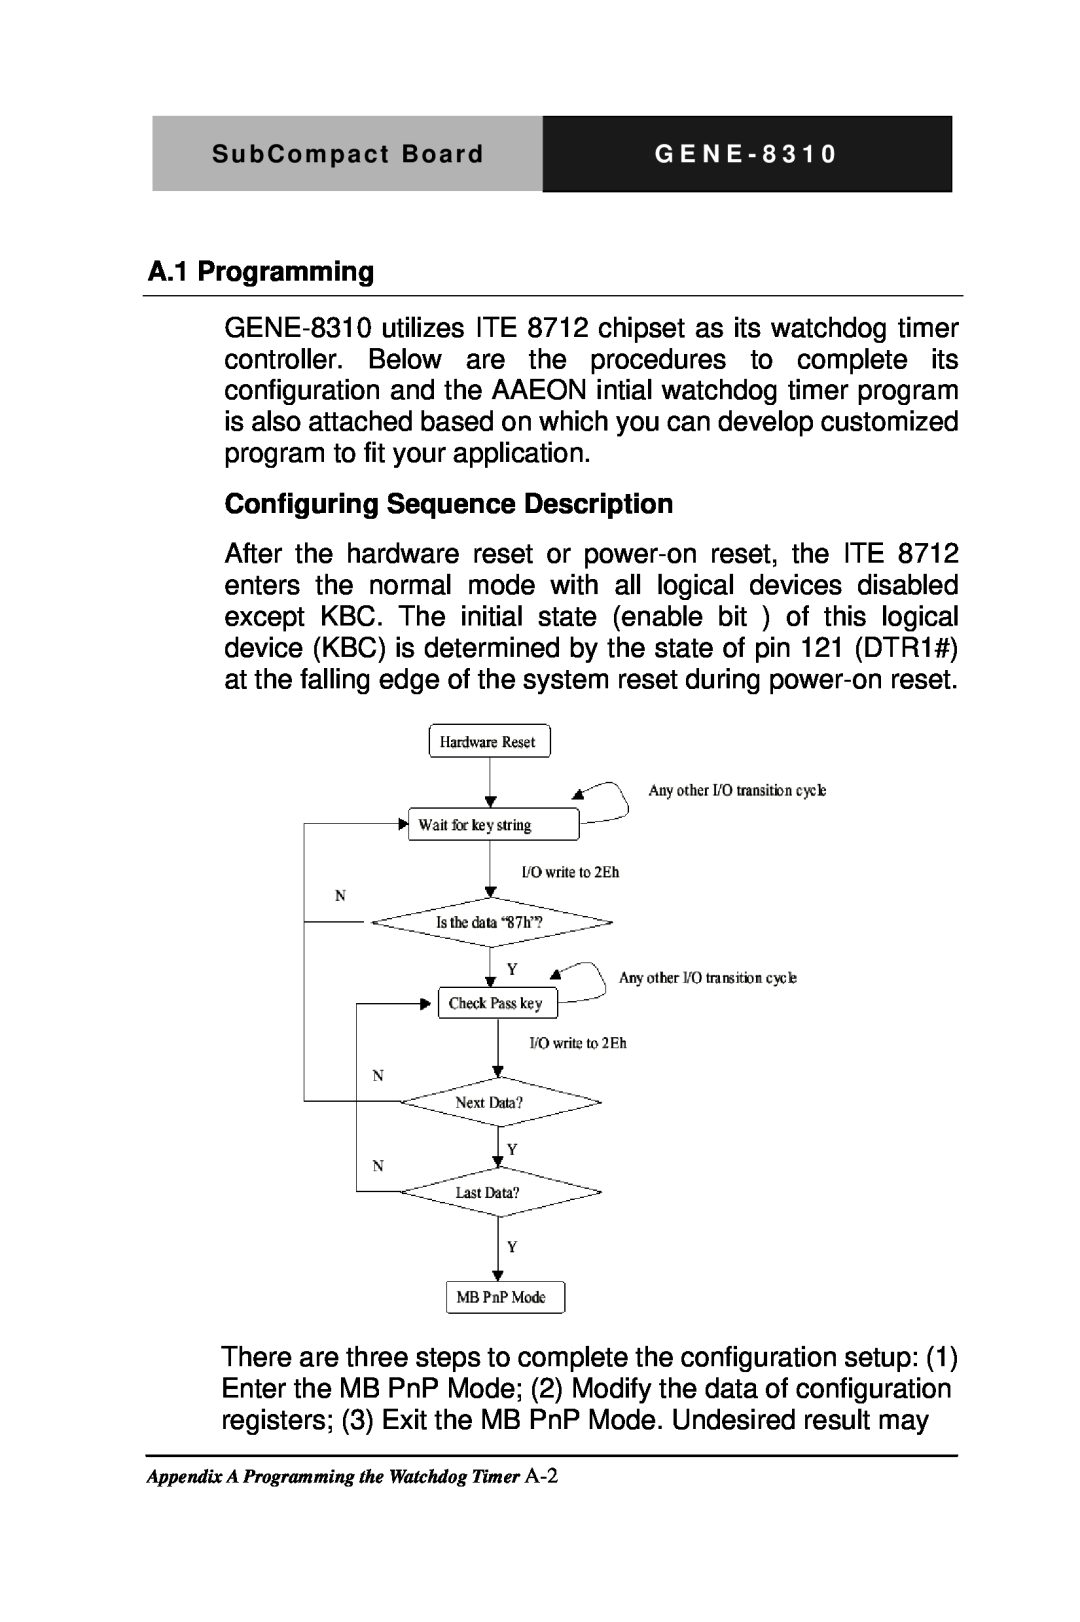 Intel GENE-8310 manual A.1 Programming, Configuring Sequence Description, Appendix A Programming the Watchdog Timer A-2 